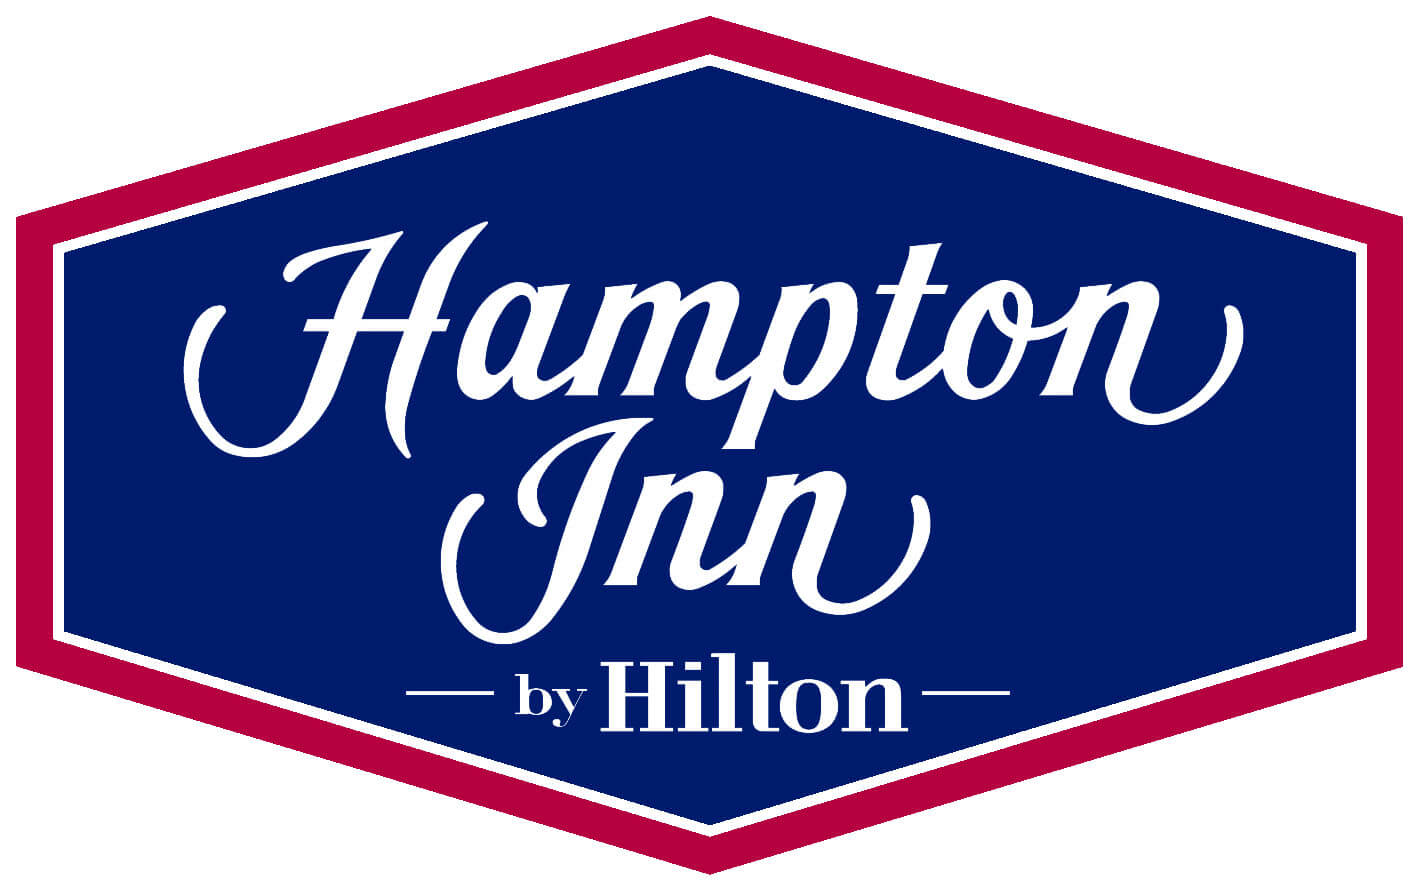 hotel_logo